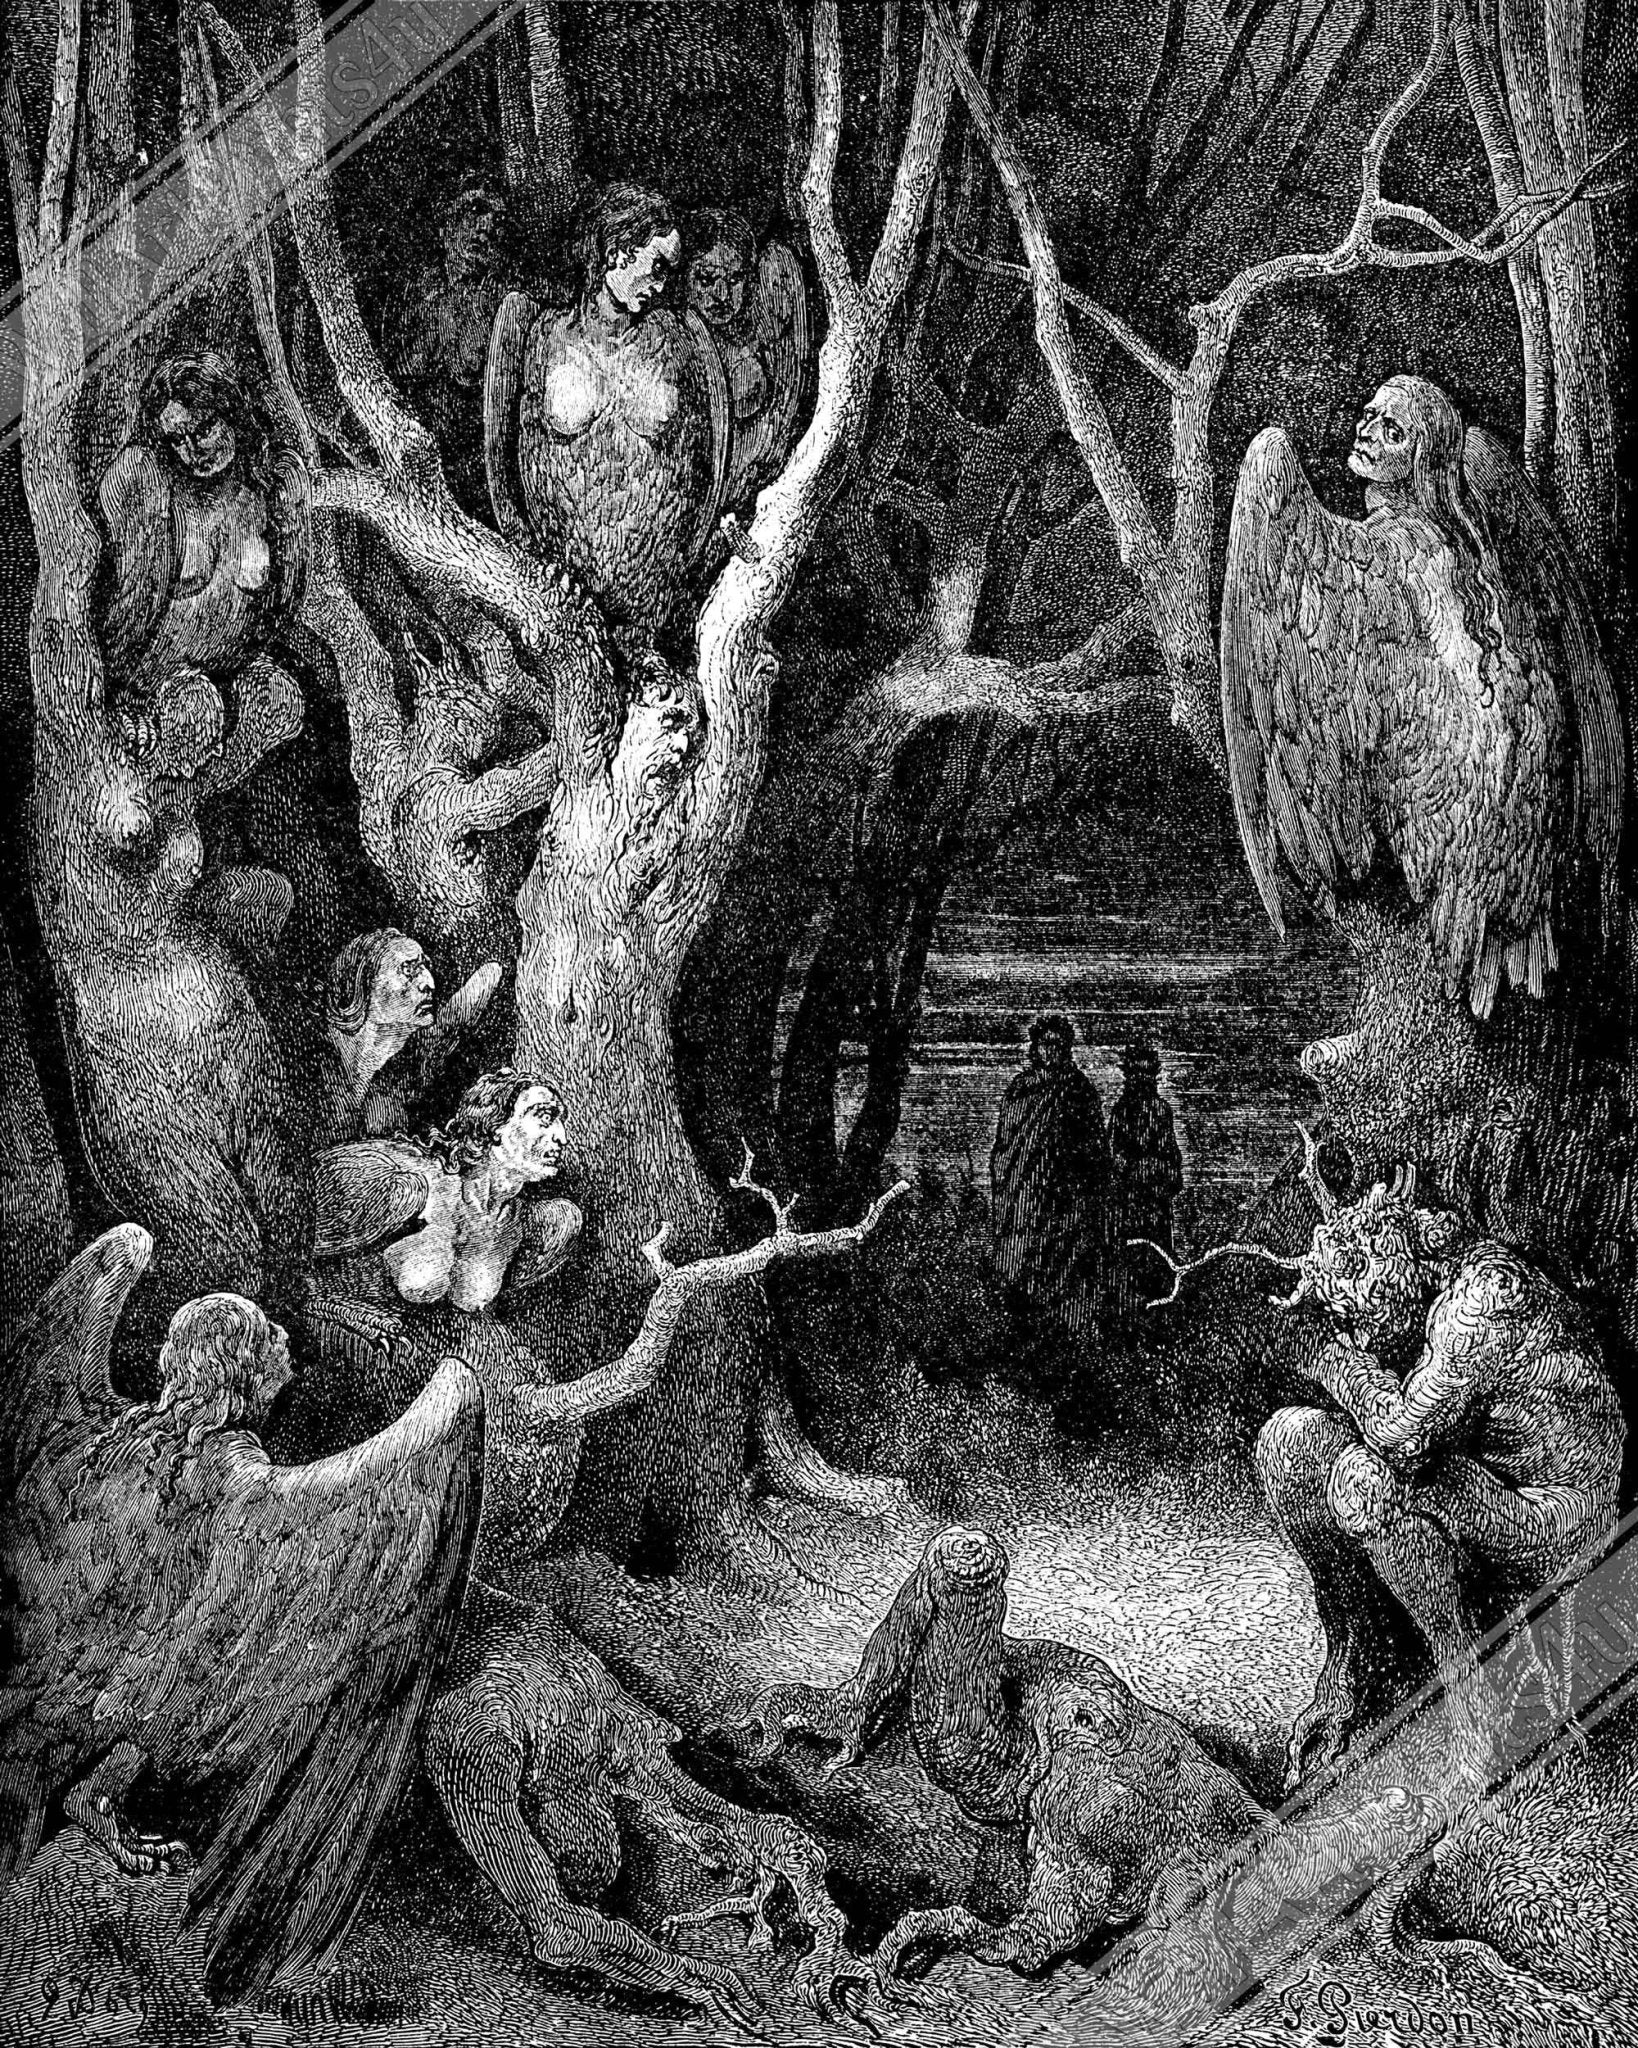 Gustav Dore Framed - Forest Of Suicides Framed - Halloween Gothic Framed Print, Harpies Torment The Human Trees UK, EU, USA, AUS Domestic Shipping - WallArtPrints4U